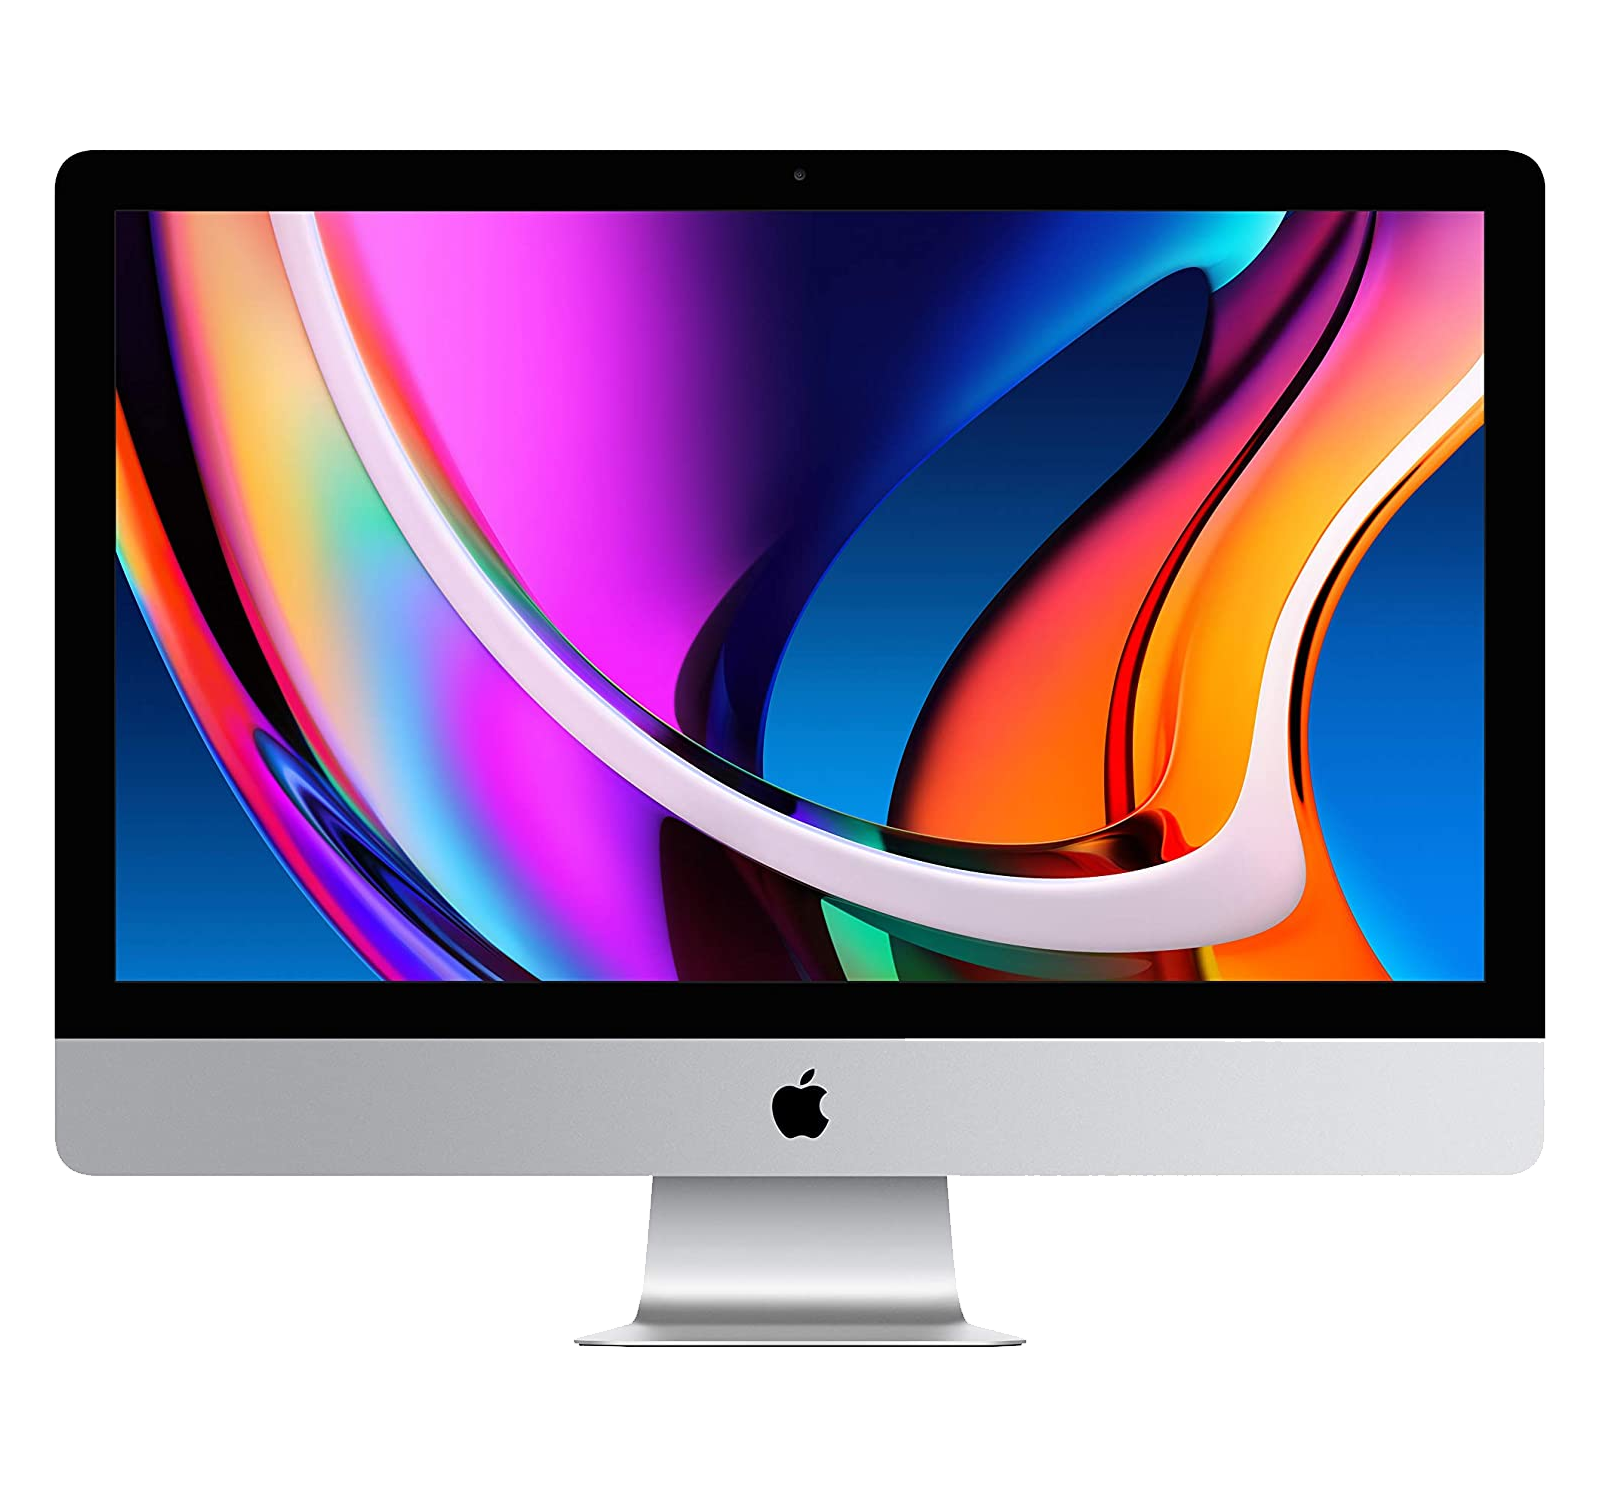 iMac 27-inch (Mid 2020 model)